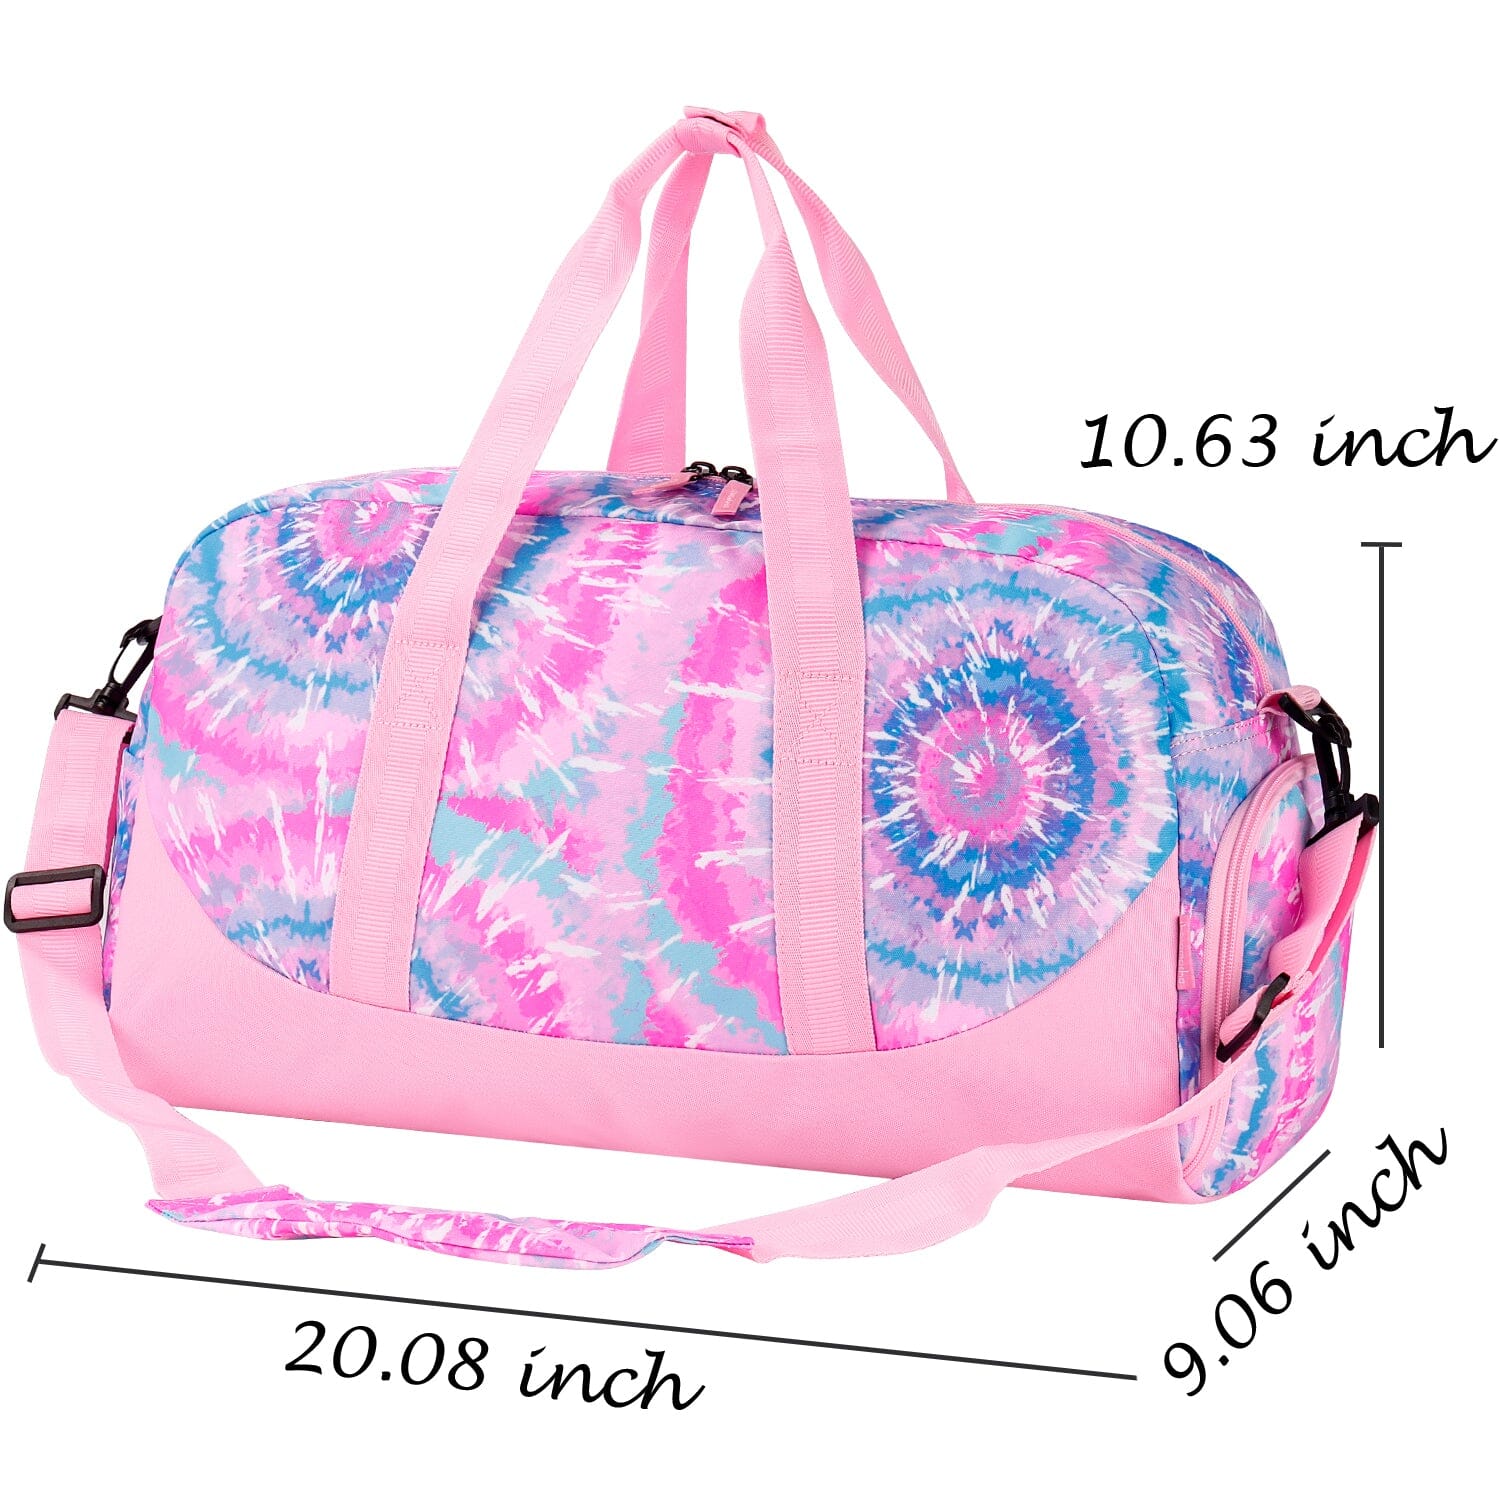 Choco Mocha Kids Pink Duffle Bag for Girls, Kids Tie Dye Travel Bag 20.08*9.06*10.63 Inches chocomochakids 